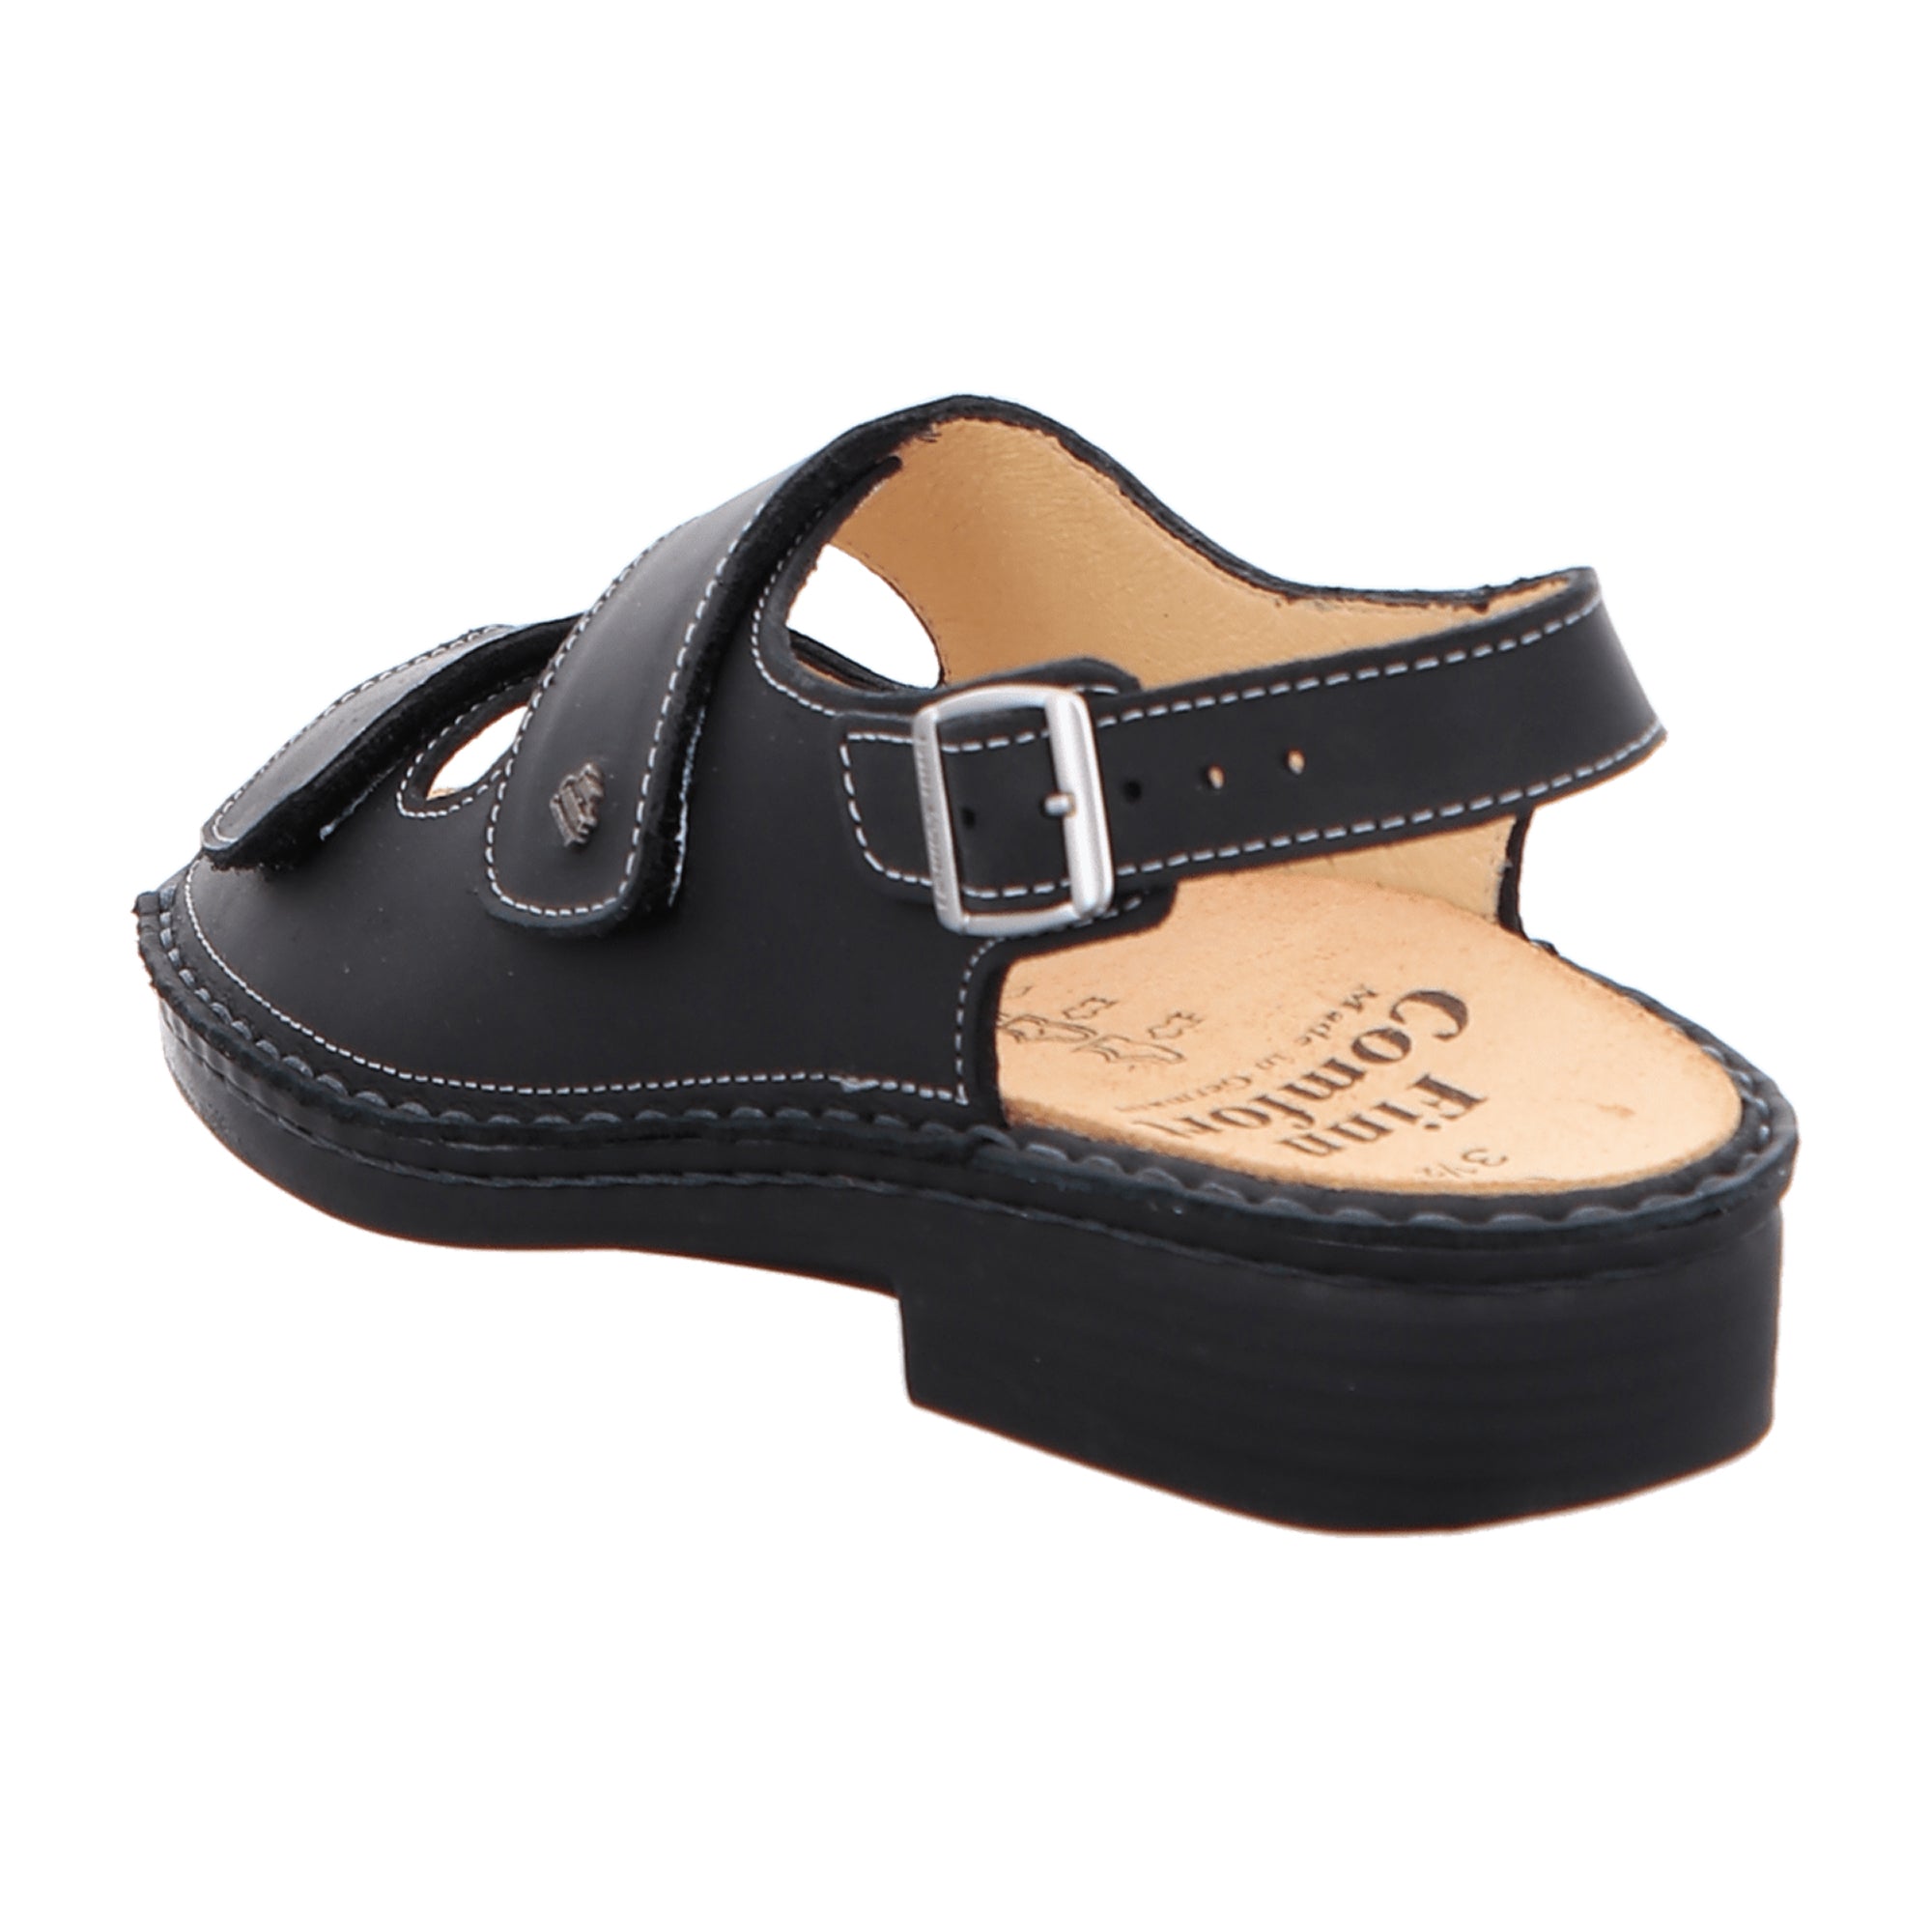 Finn Comfort Tahiti Women's Sandals, Elegant Black Leather - Comfort & Style